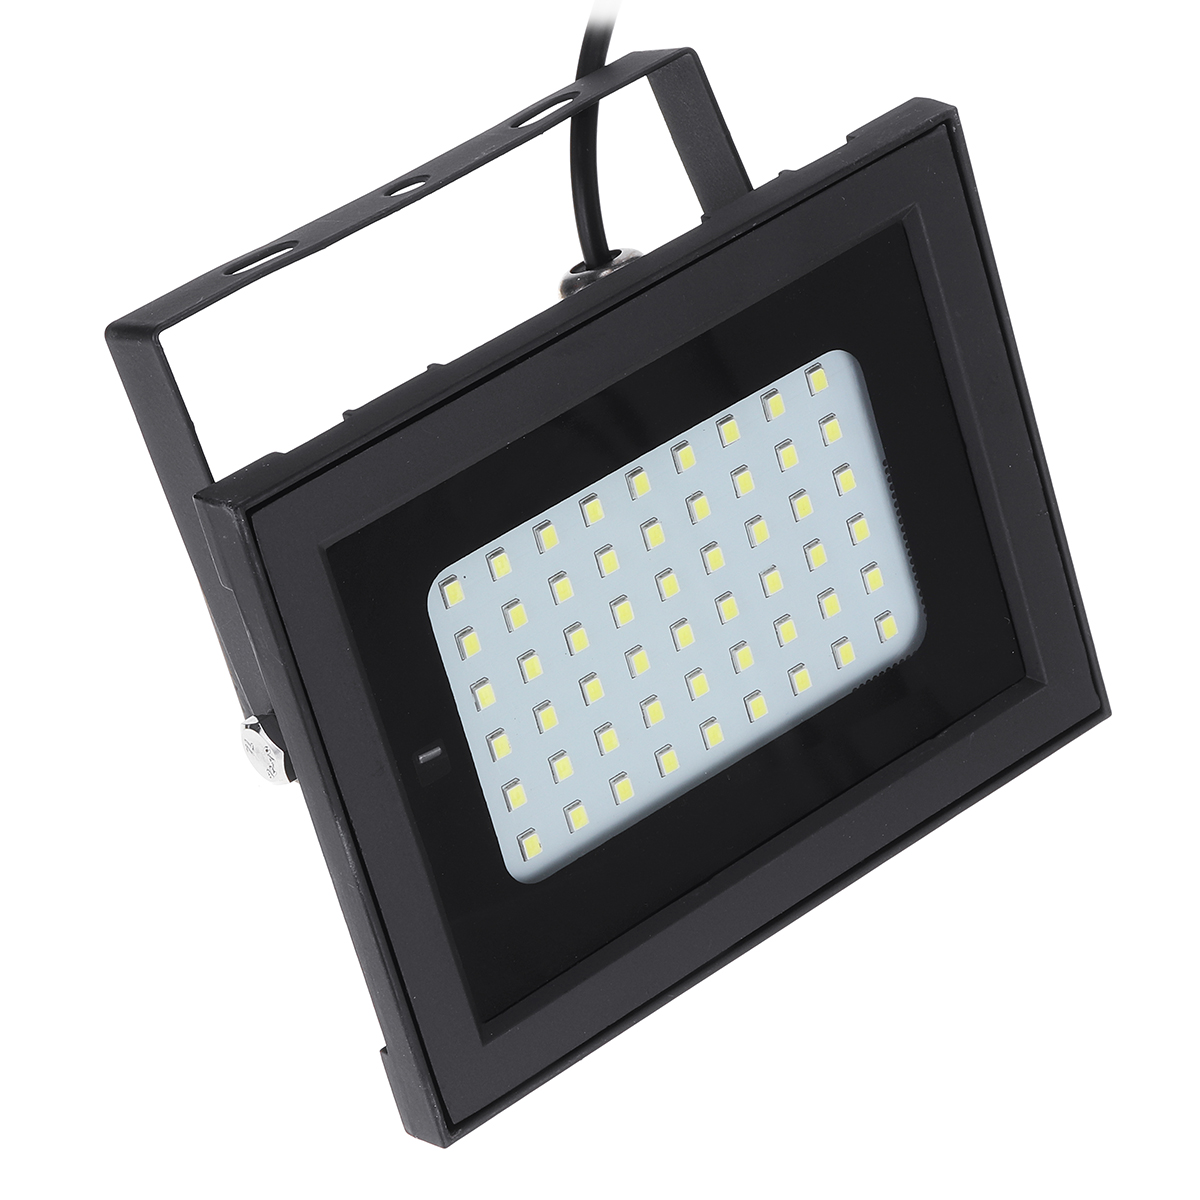 400LM-54-LED-Solar-Panel-Flood-Light-Spotlight-Project-Lamp-IP65-Waterproof-Outdoor-Camping-Emergenc-1462694-5